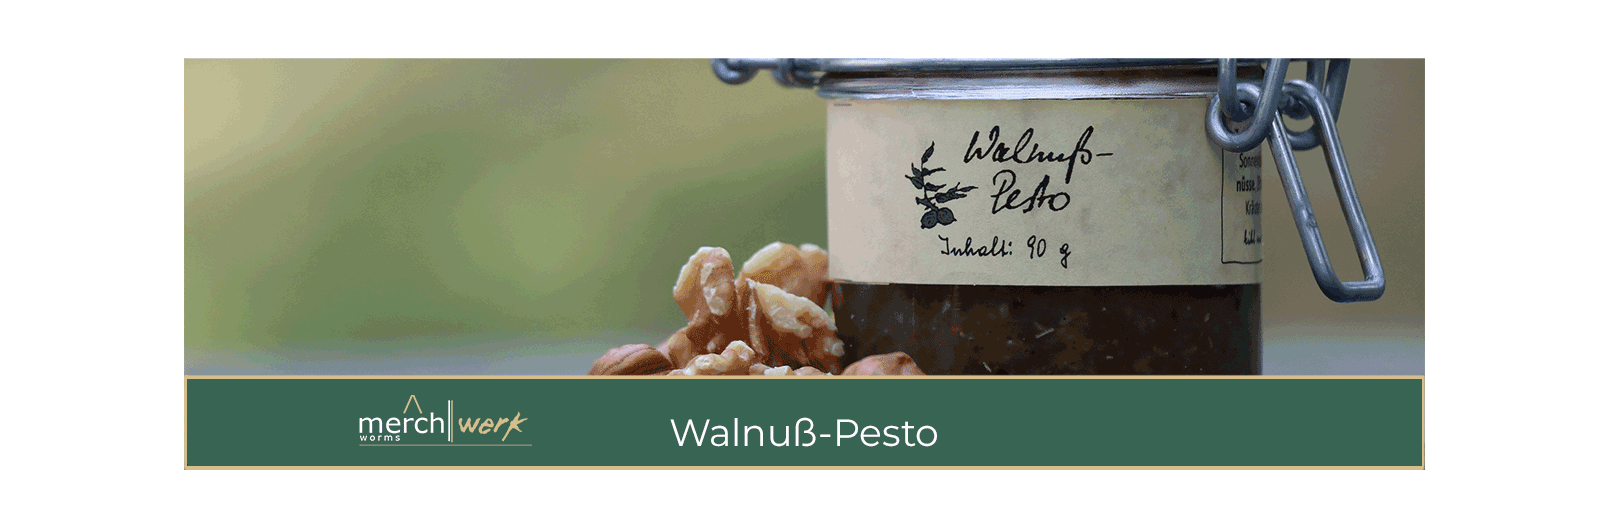 Walnuß-Pesto